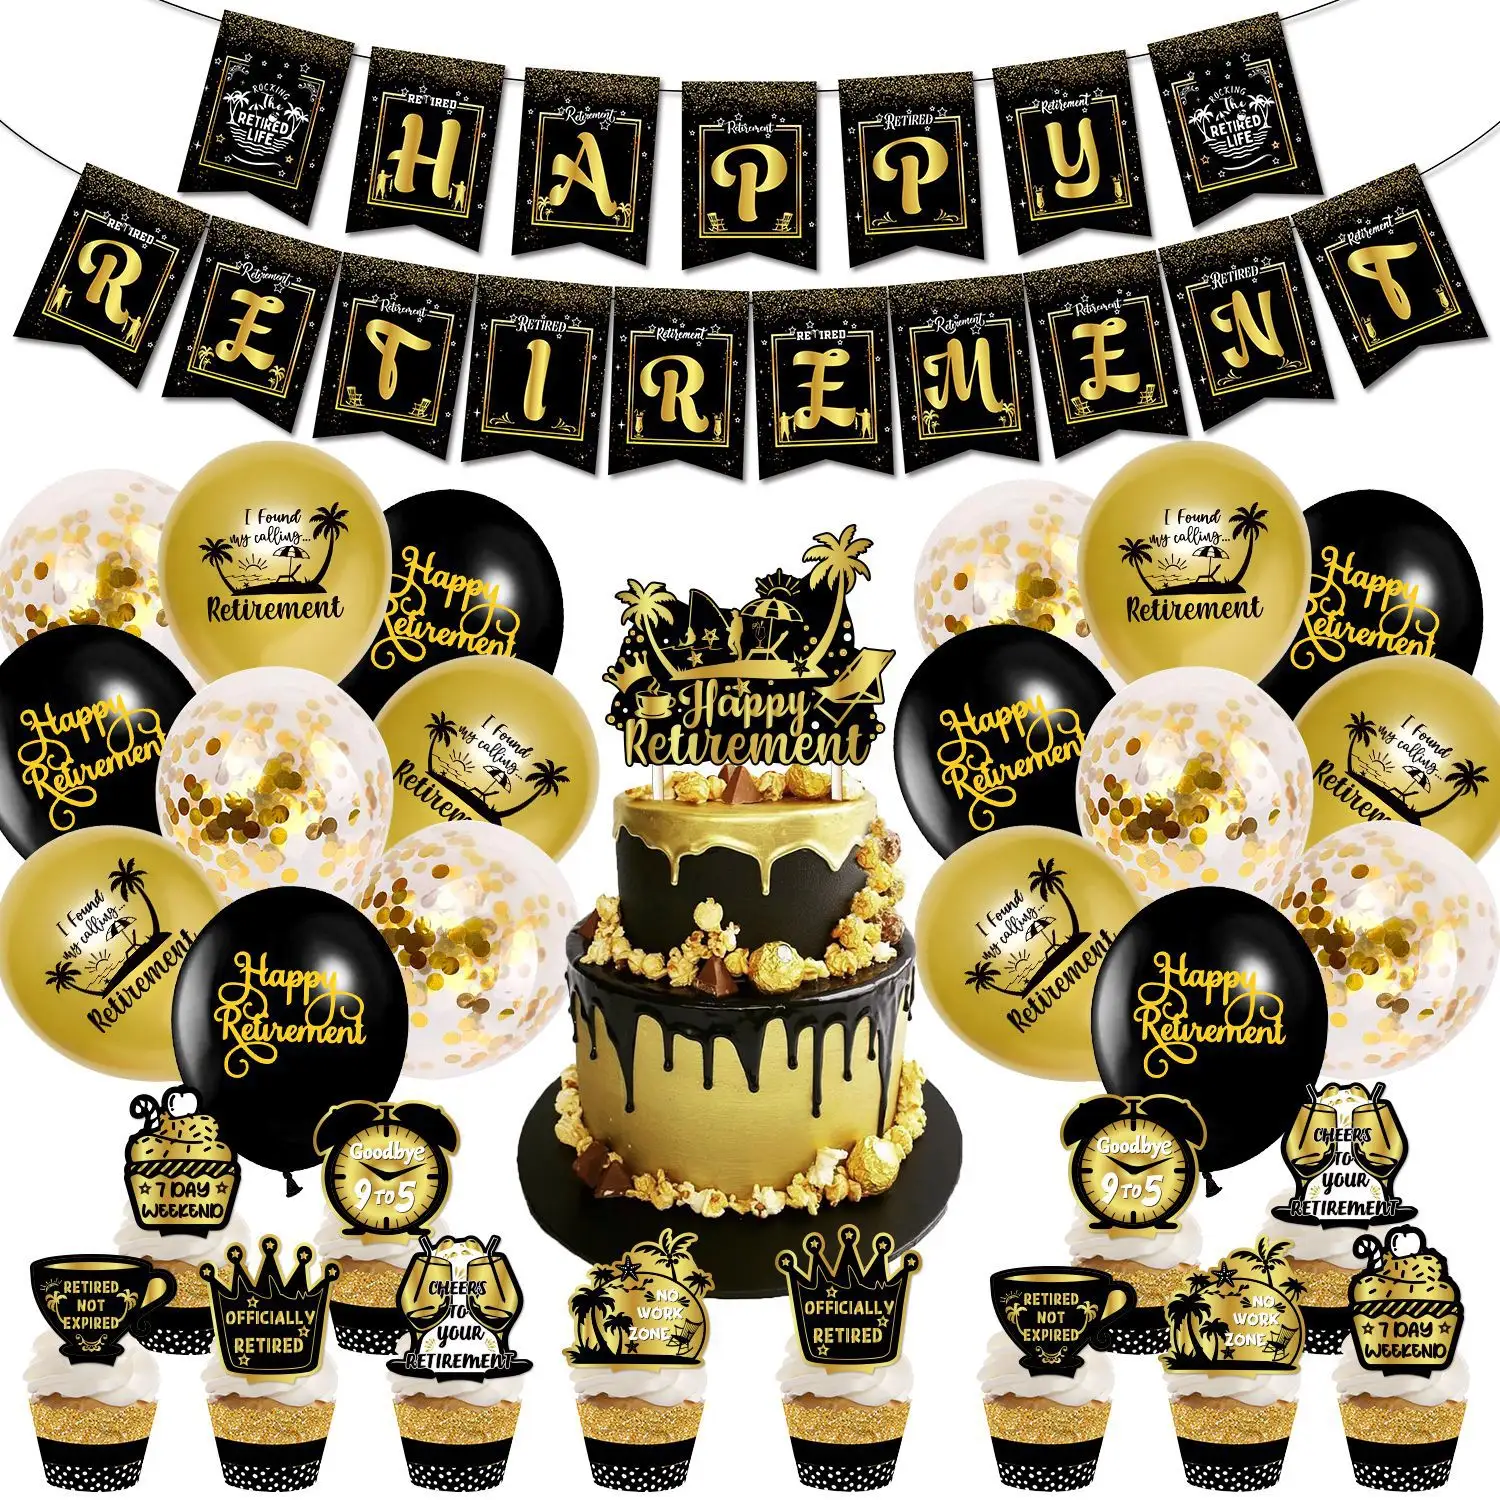 Black gold retirement theme party set banner size cake card latex confetti balloon set decoration props